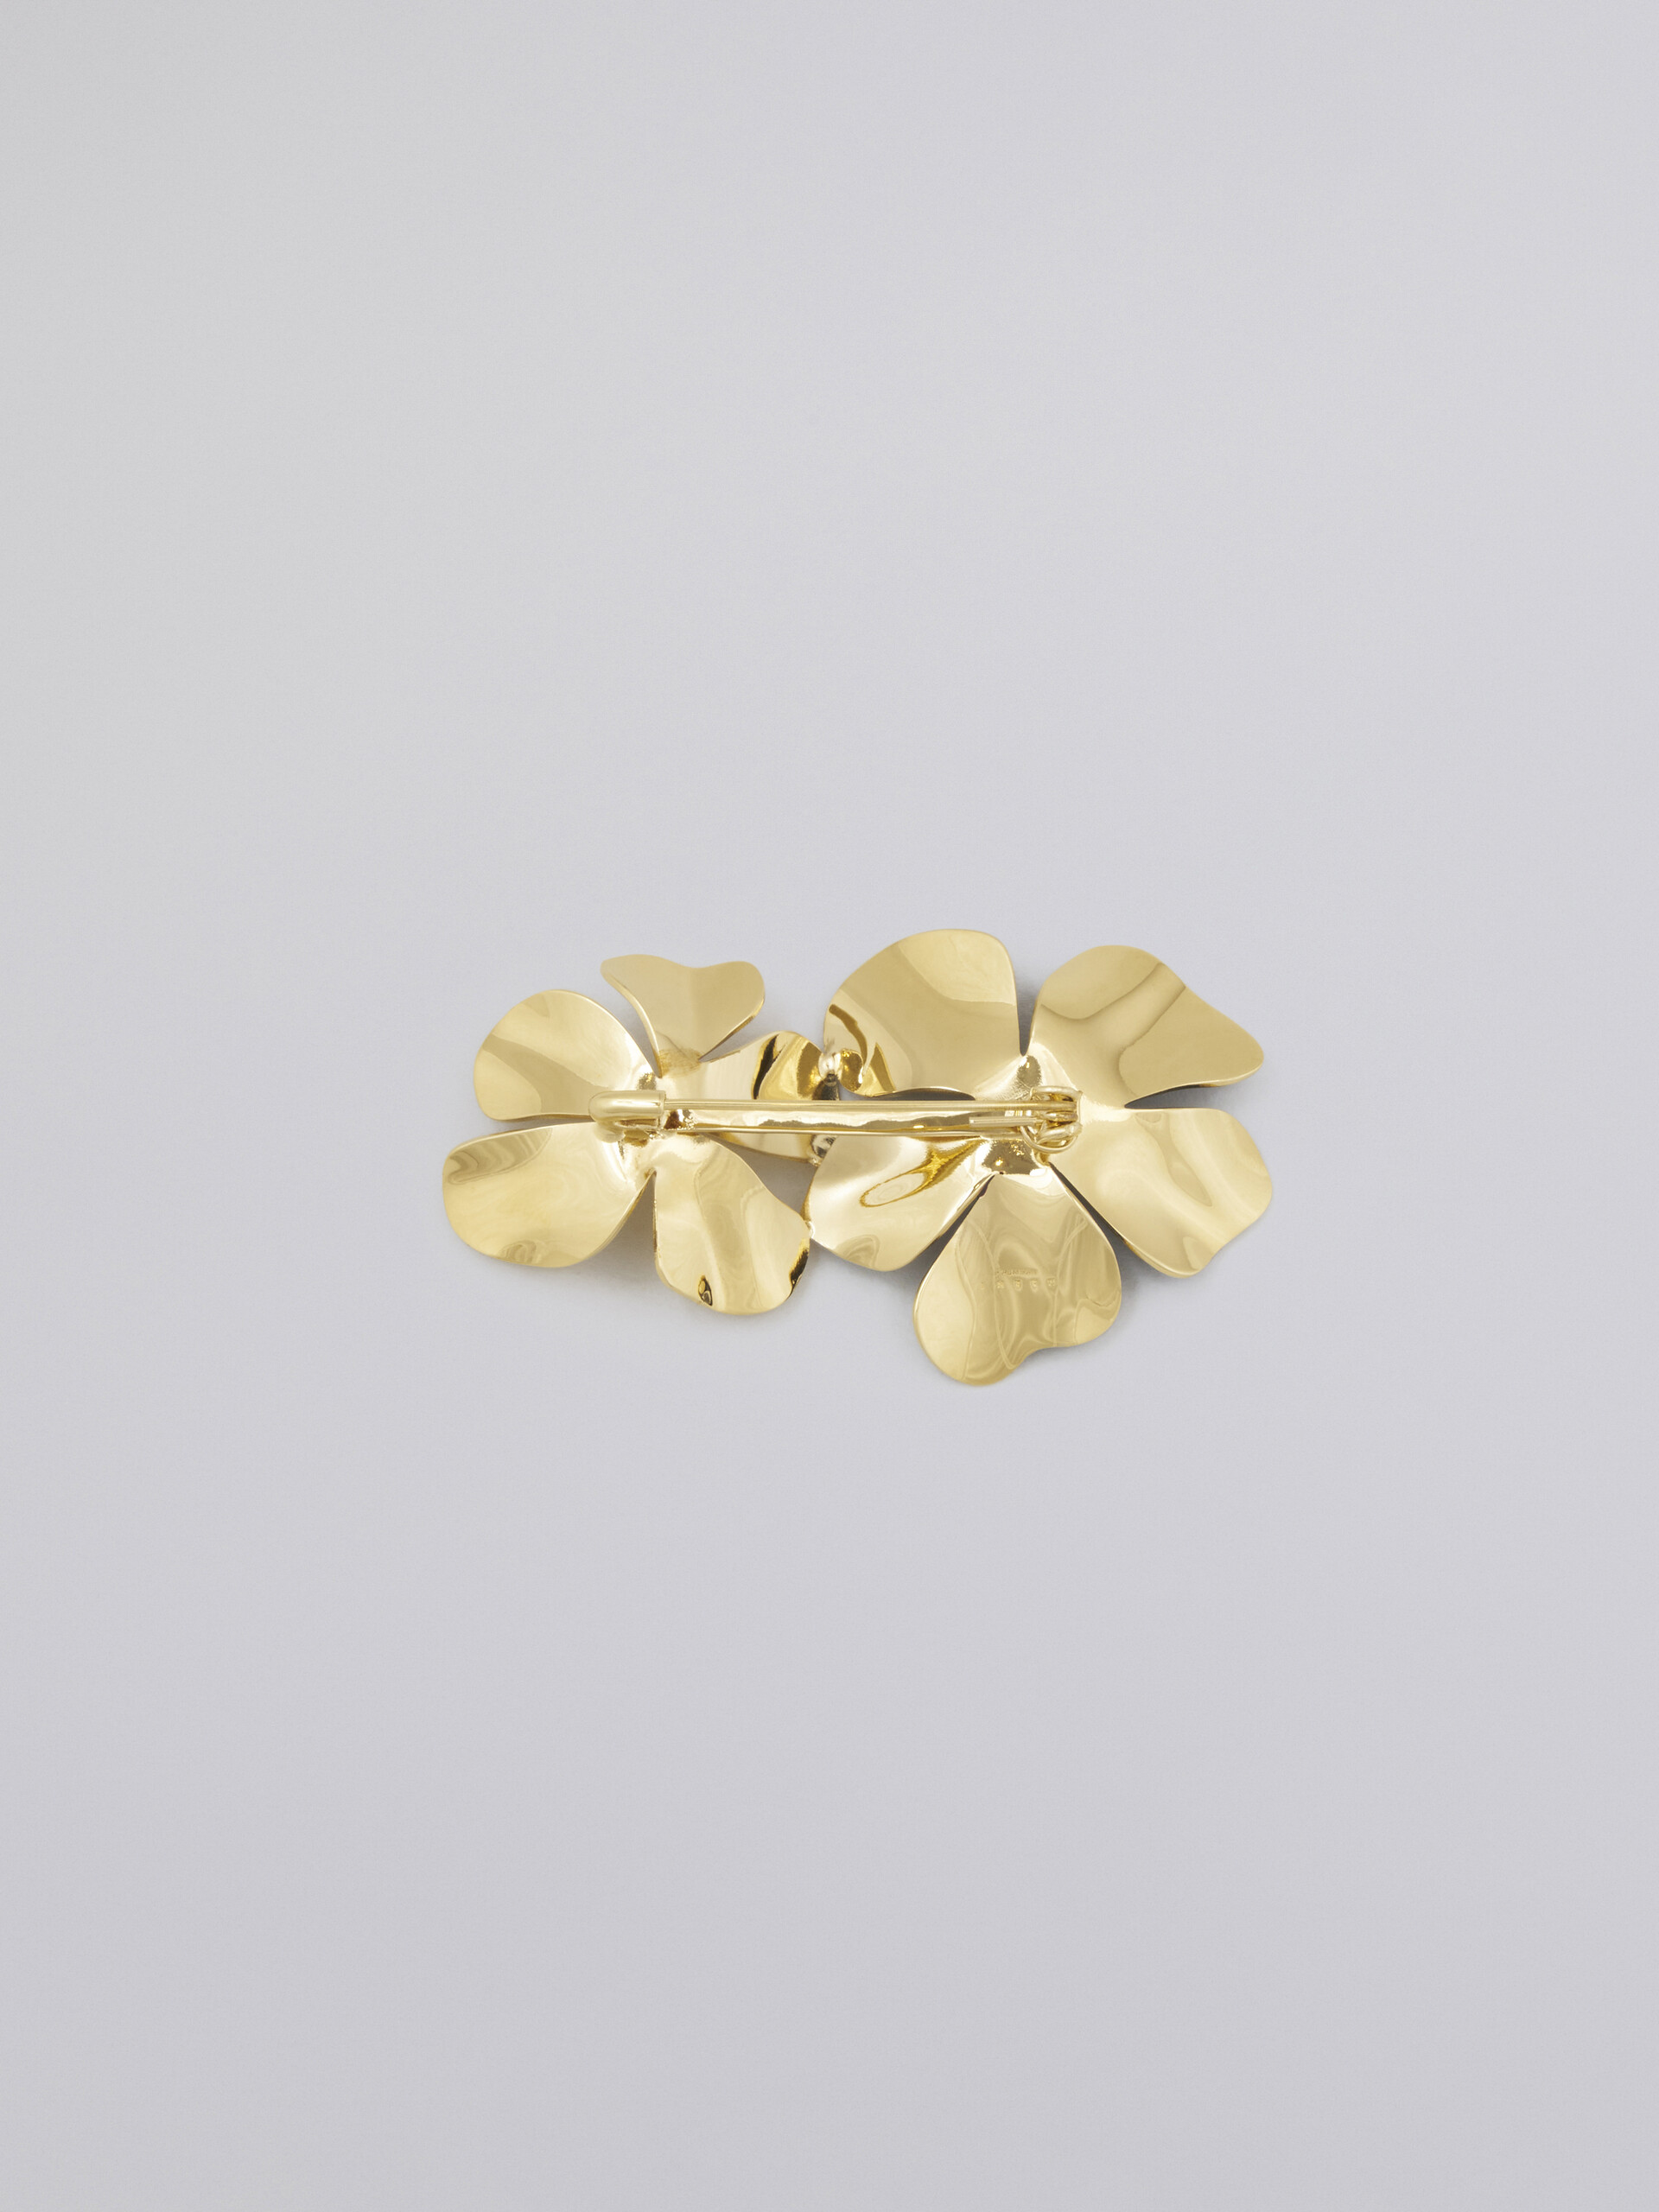 Brass FLOWER brooch in the shape of a flower with enamel petals - Broach - Image 2